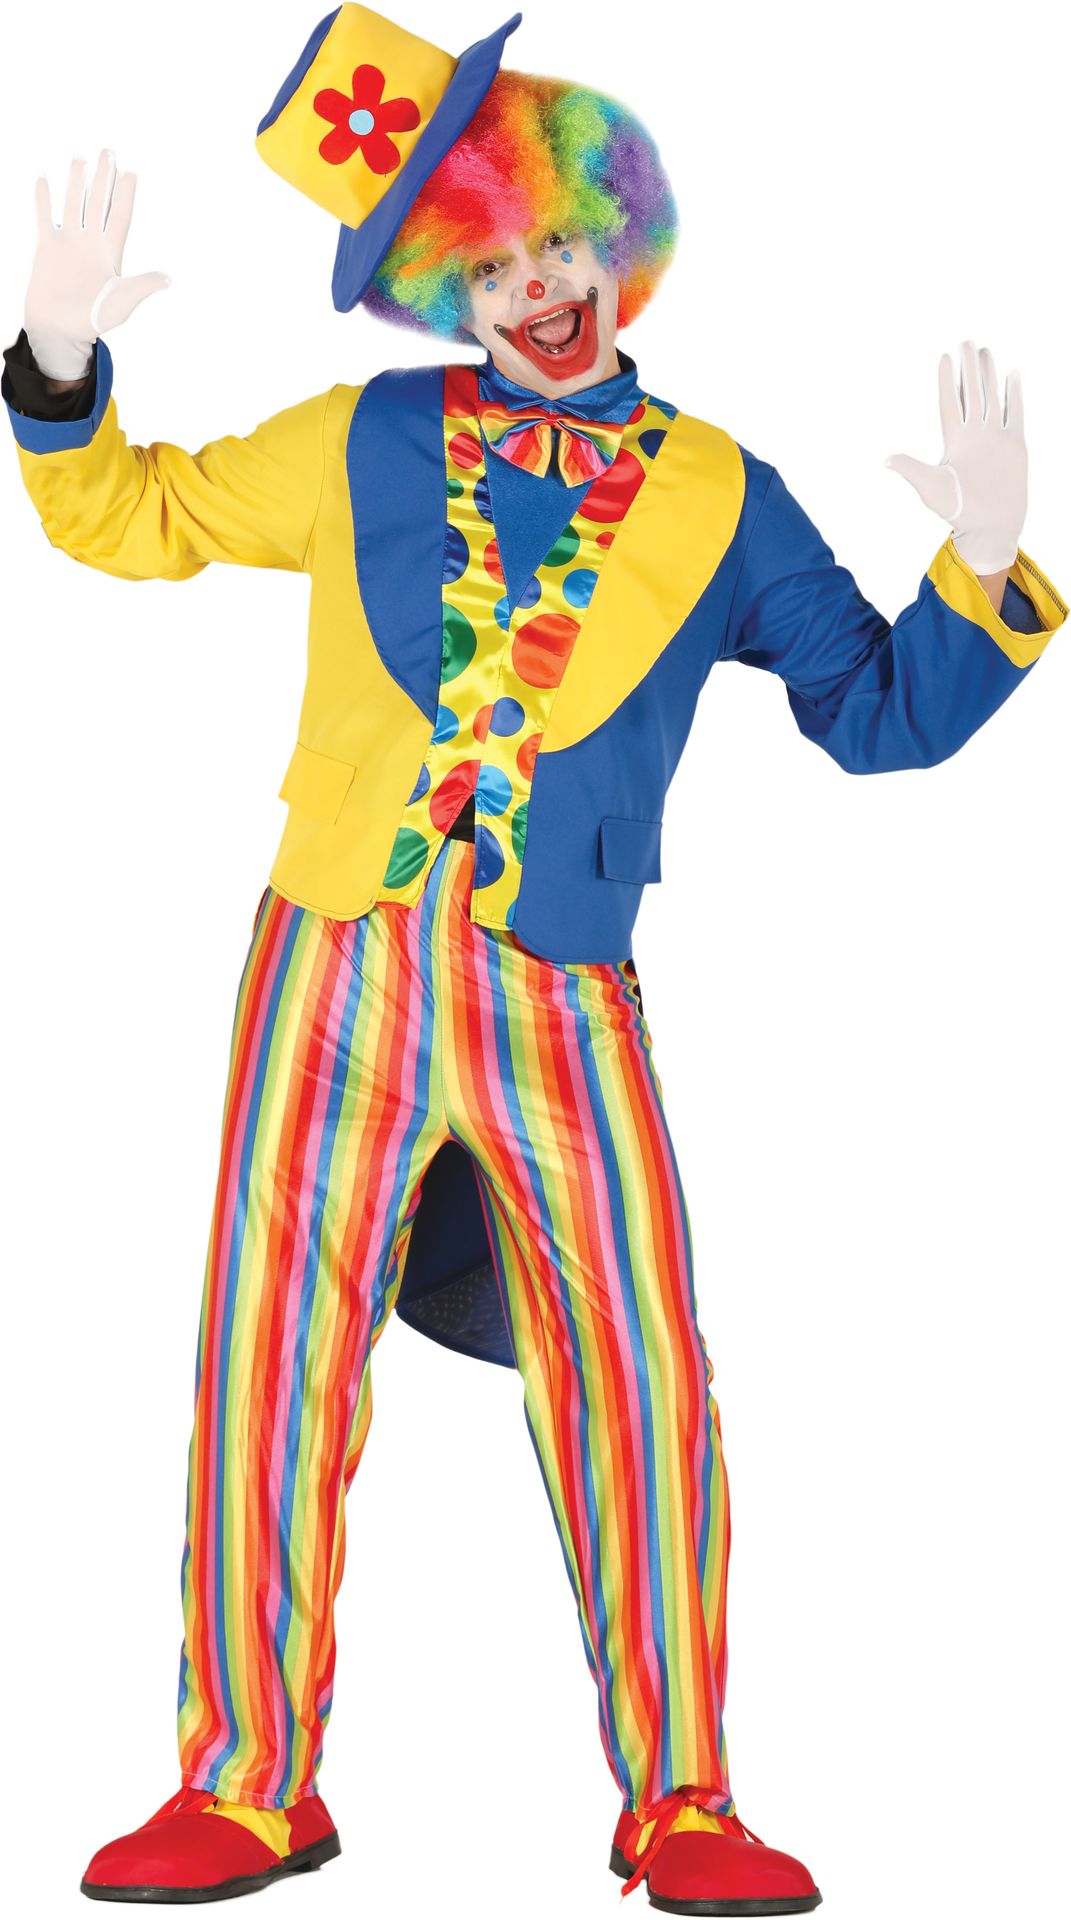 Vervallen Initiatief veelbelovend Grappig gekleurd clown kostuum | Carnavalskleding.nl